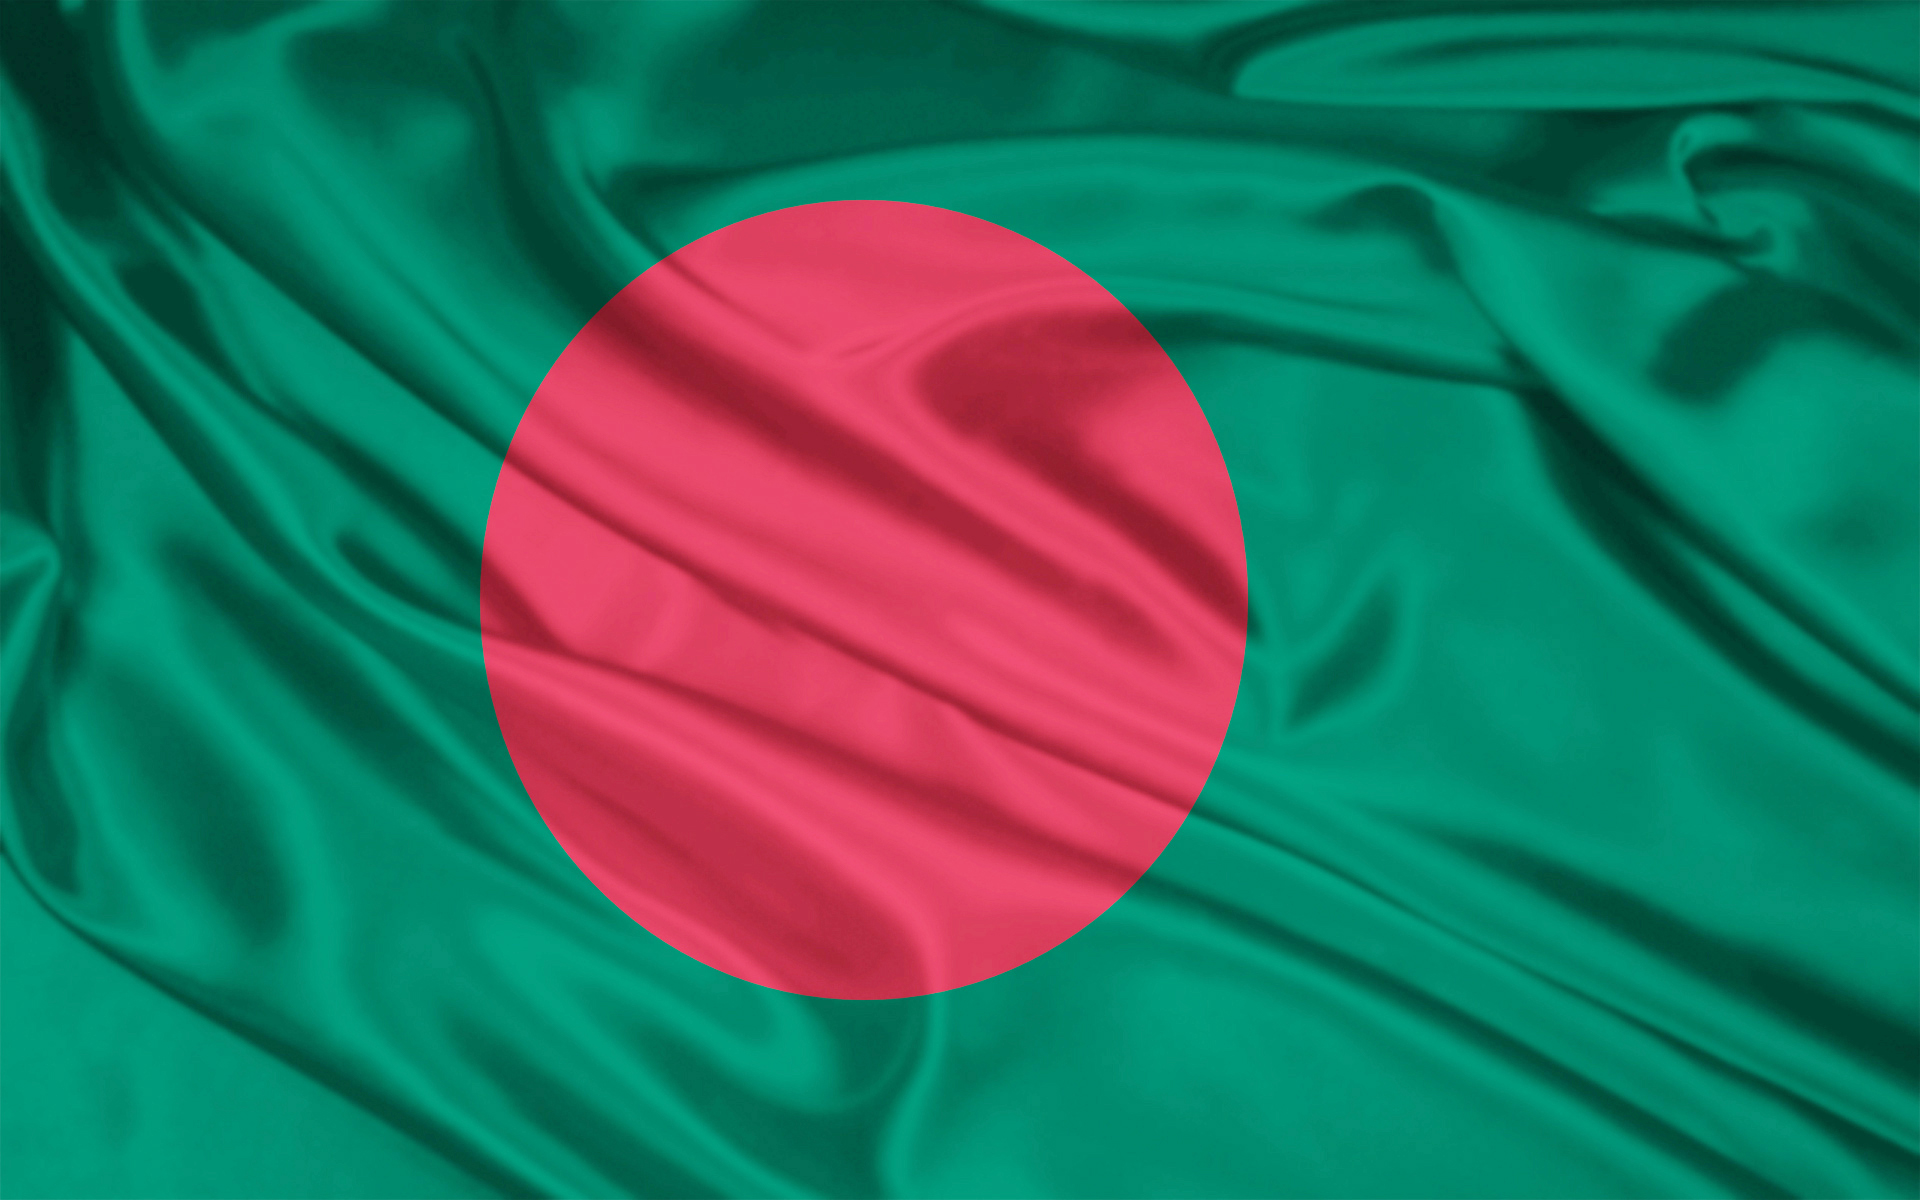 bangladesch flagge tapete hd,grün,rot,blaugrün,türkis,aqua